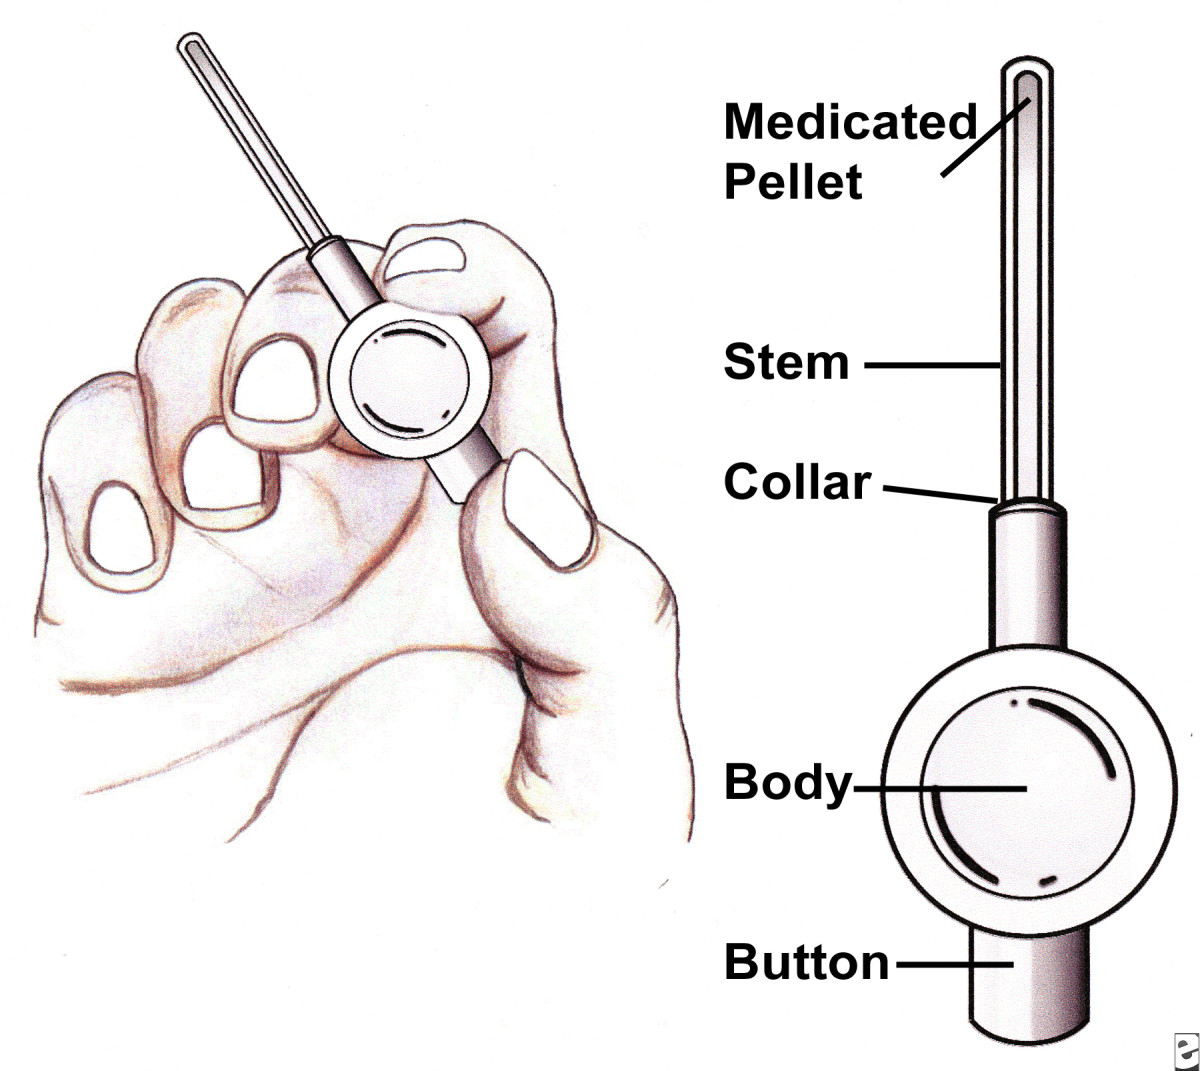 Medicated Urethral System for Erections (MUSE) applicator.